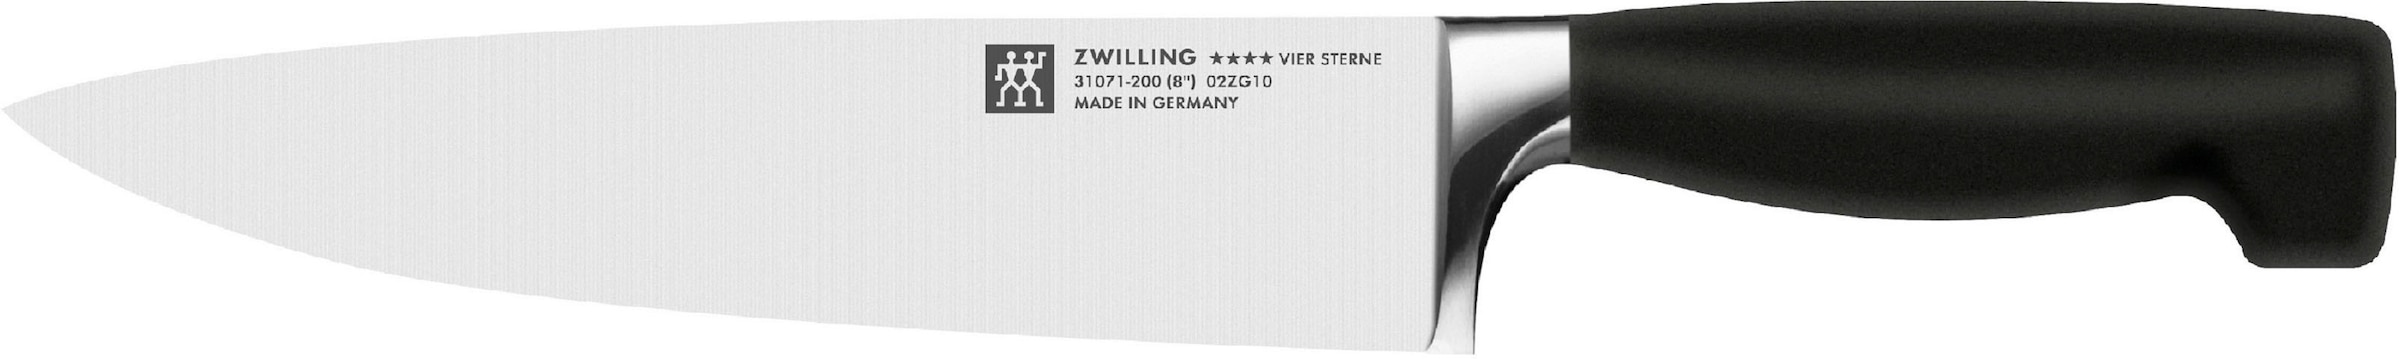 Zwilling Kochmesser »VIER STERNE«, (1 tlg.), 20 cm